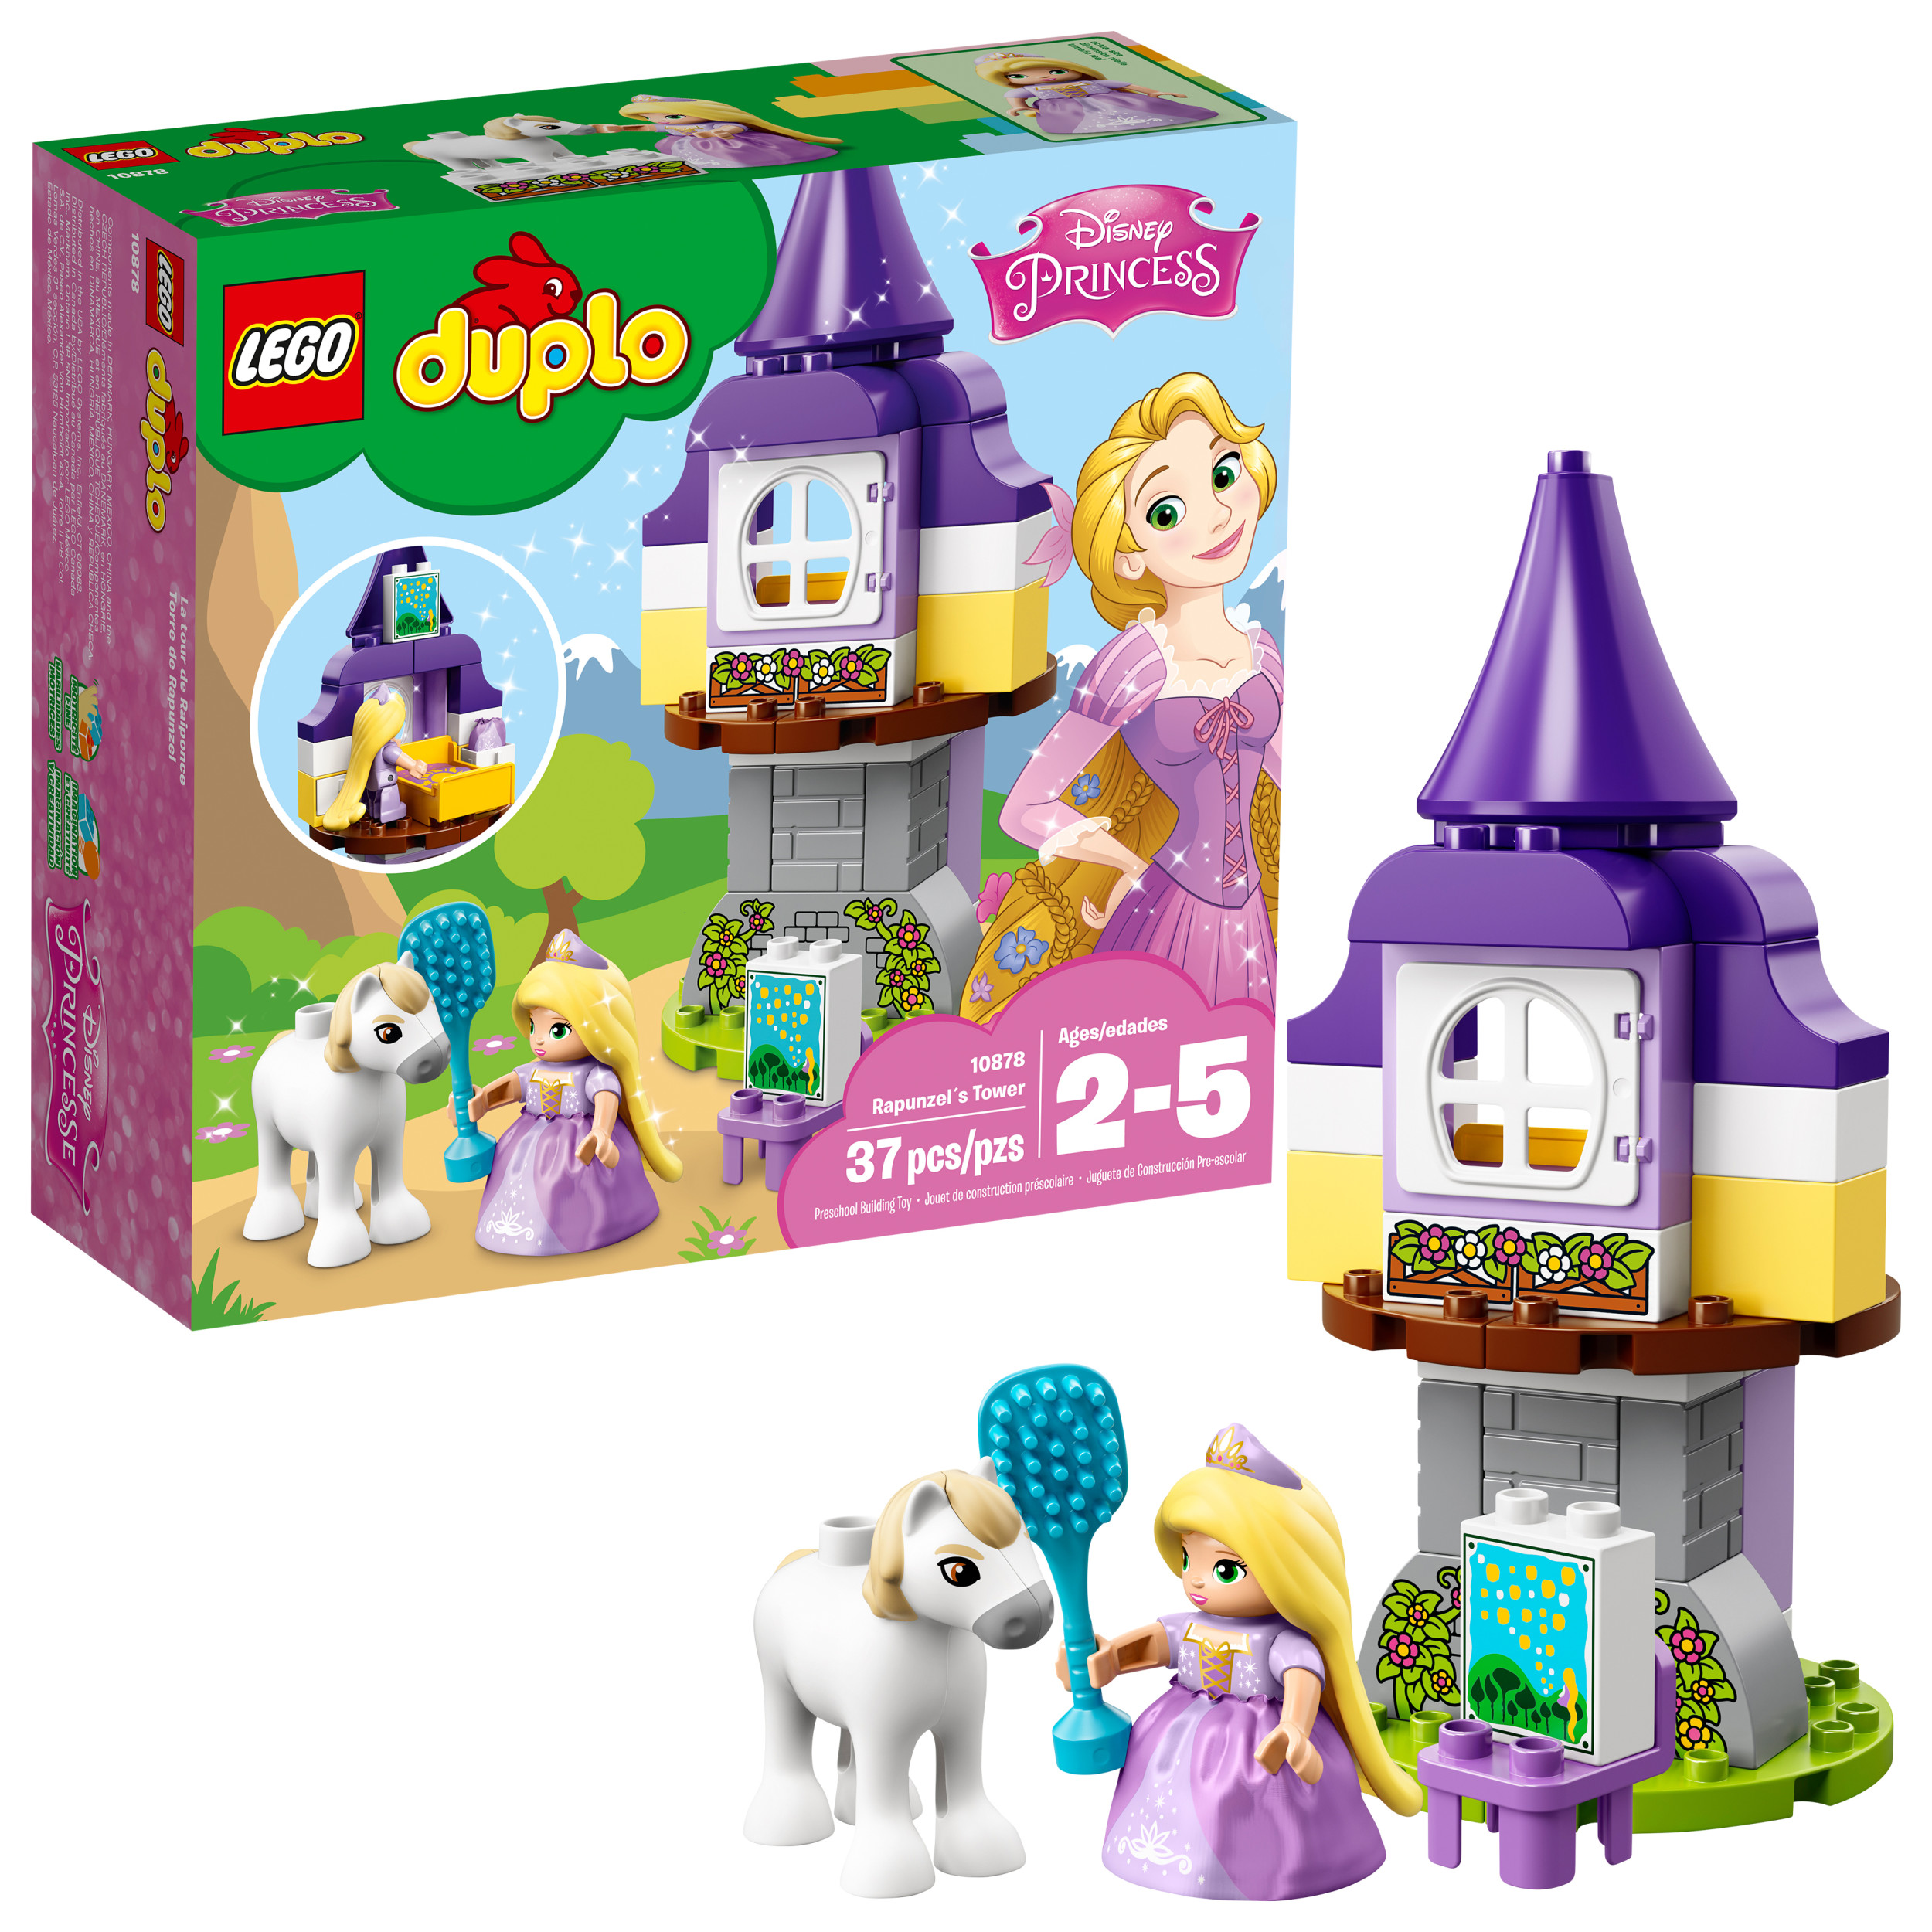 LEGO DUPLO Princess? Rapunzel´s Tower 10878 (37 Pieces) - image 1 of 6